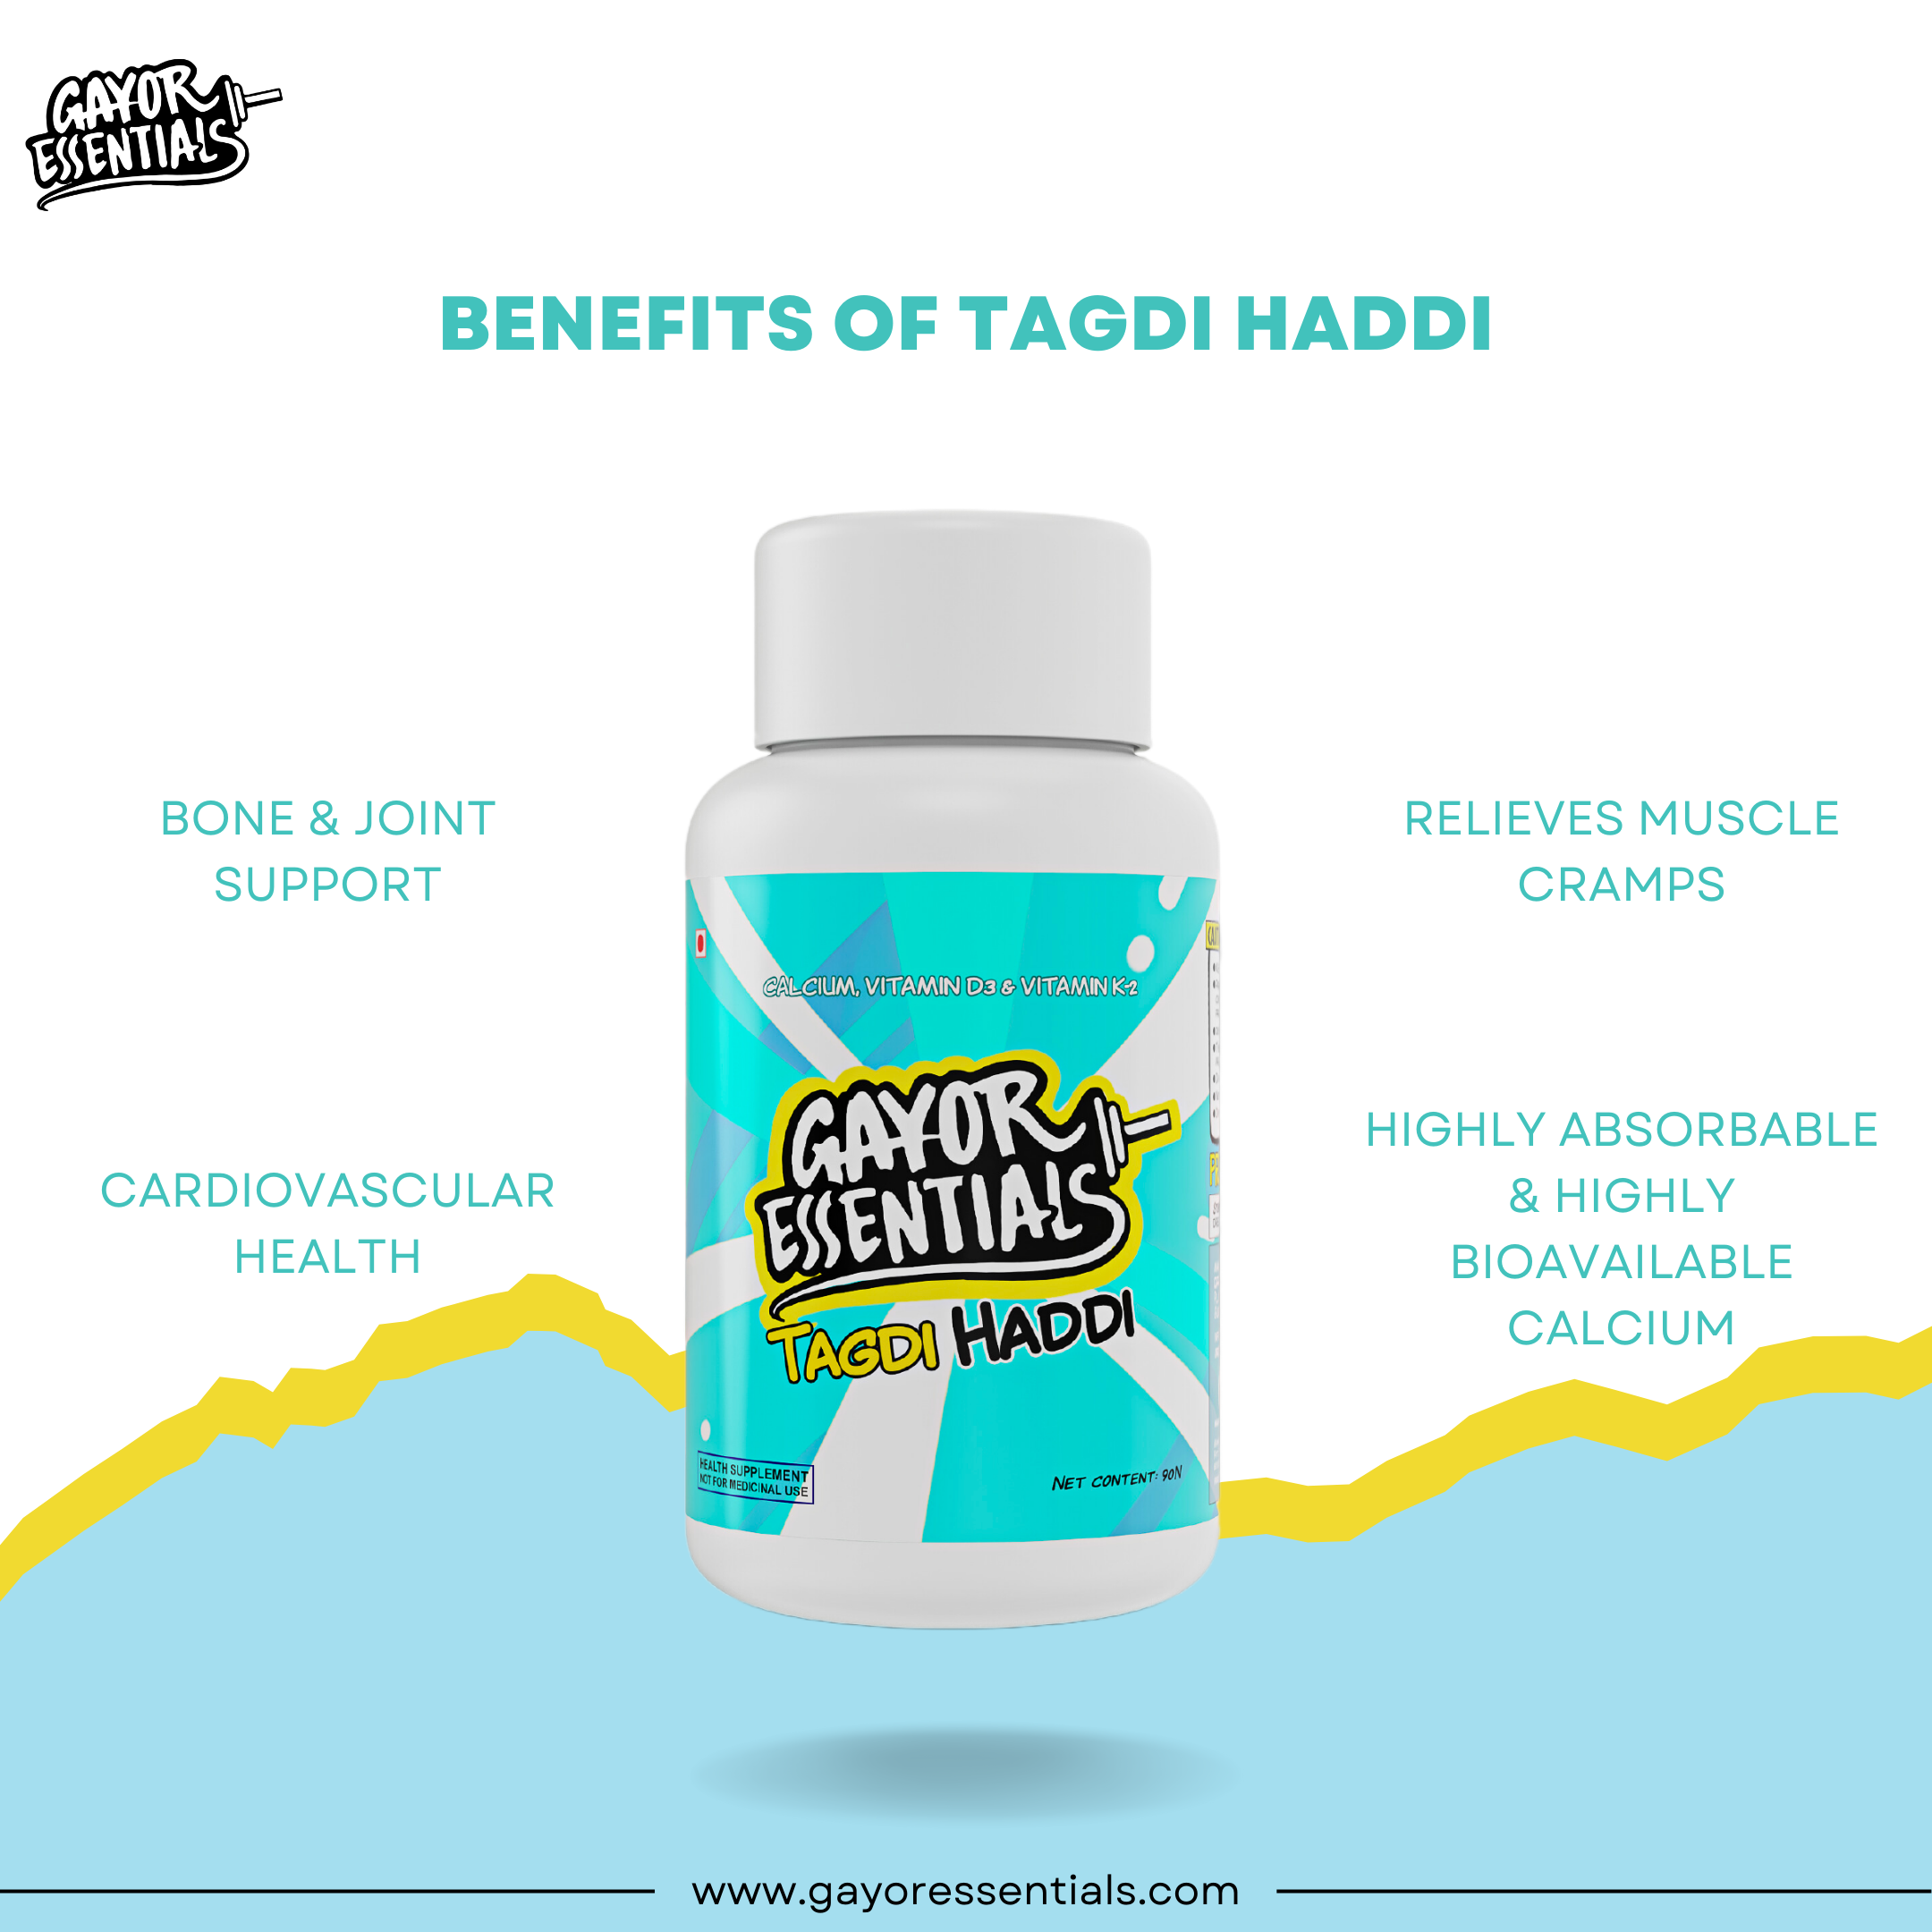 Tagdi Haddi (Calcium, Vitamin D3 & MK7)